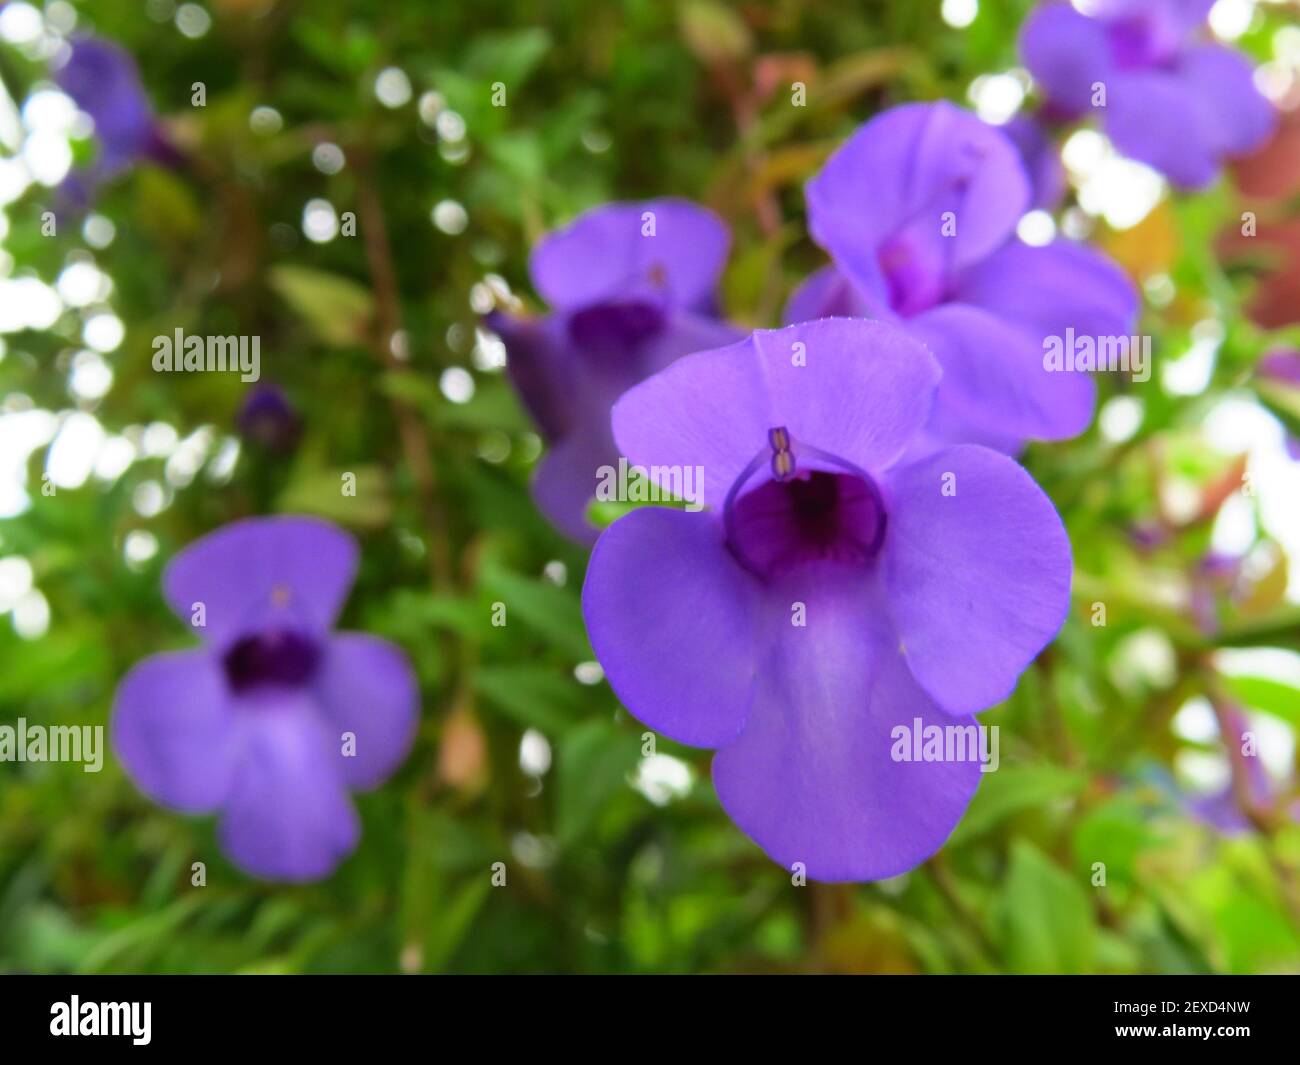 A closeup shot of purple Achimenes jasmine flowers on a blurred background Stock Photo